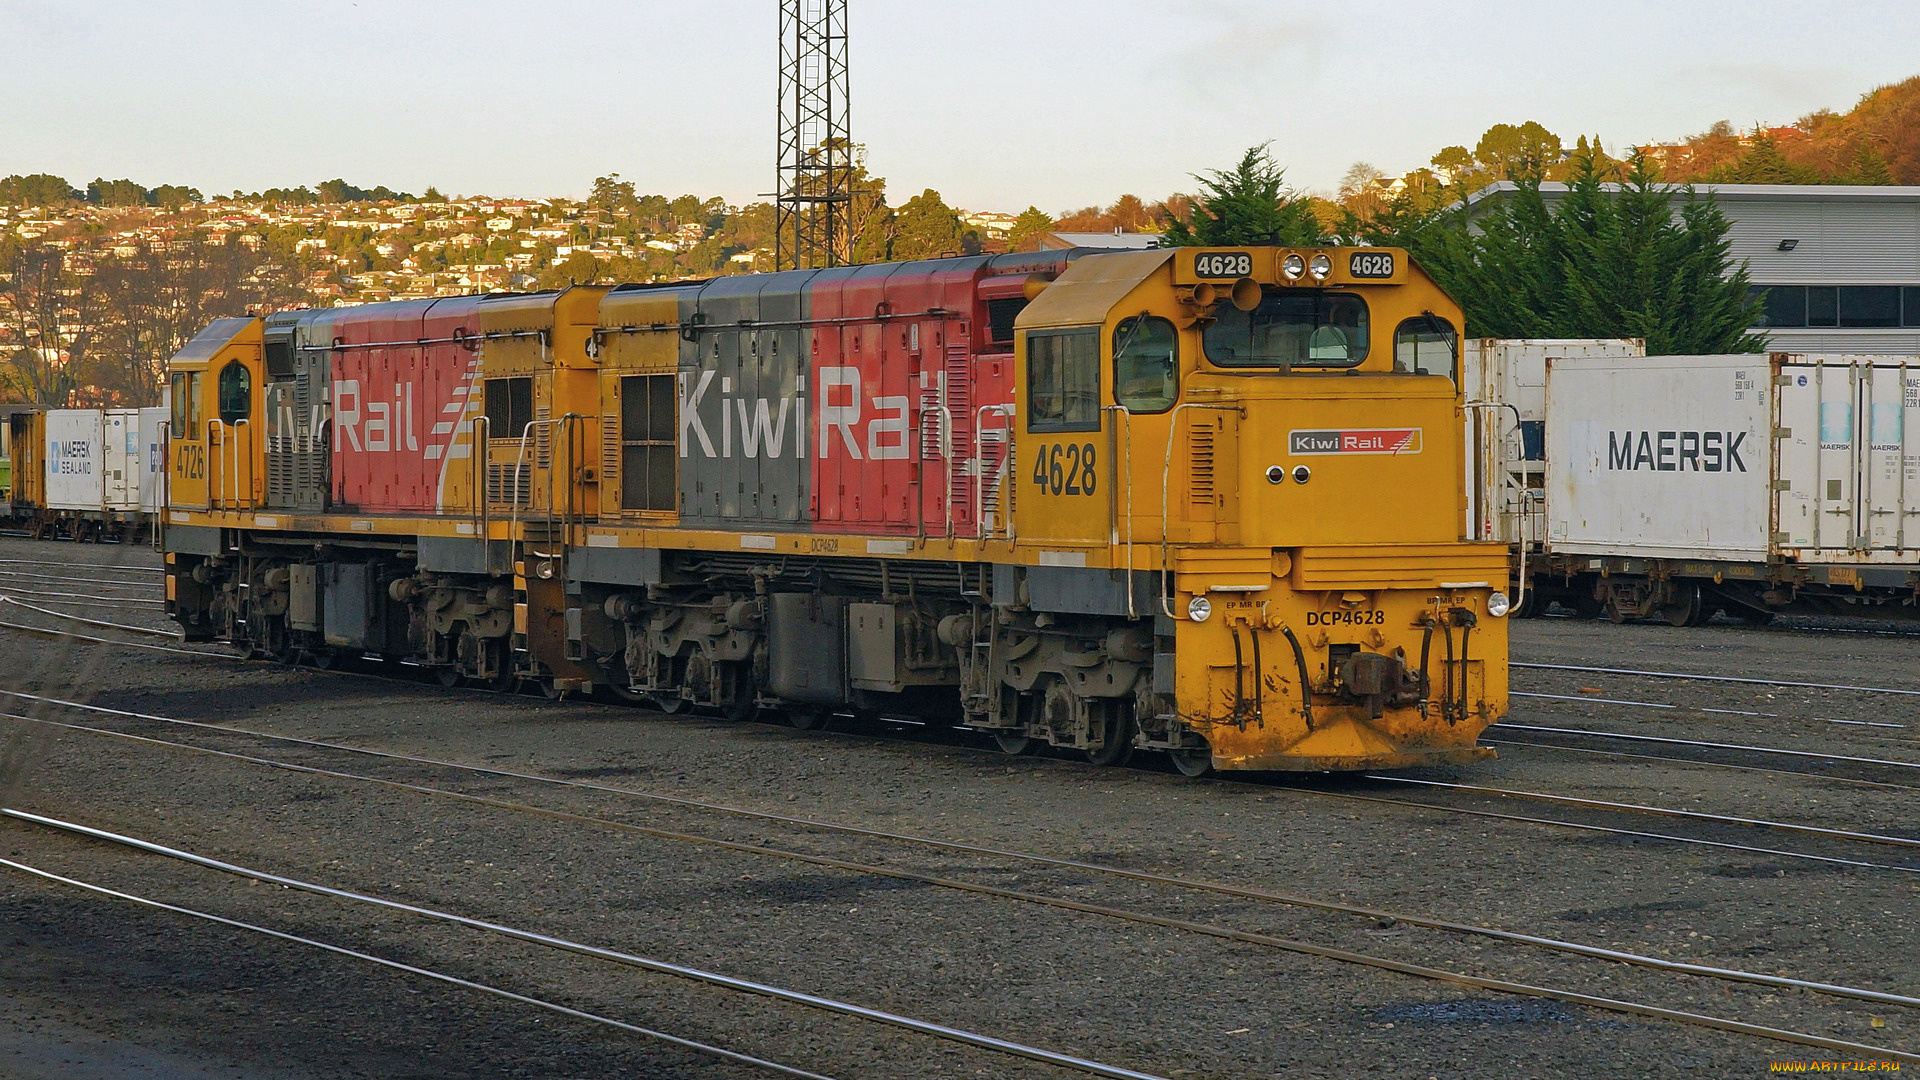 kiwirail, dcp, 4628, техника, локомотивы, локомотив, рельсы, дорога, железная